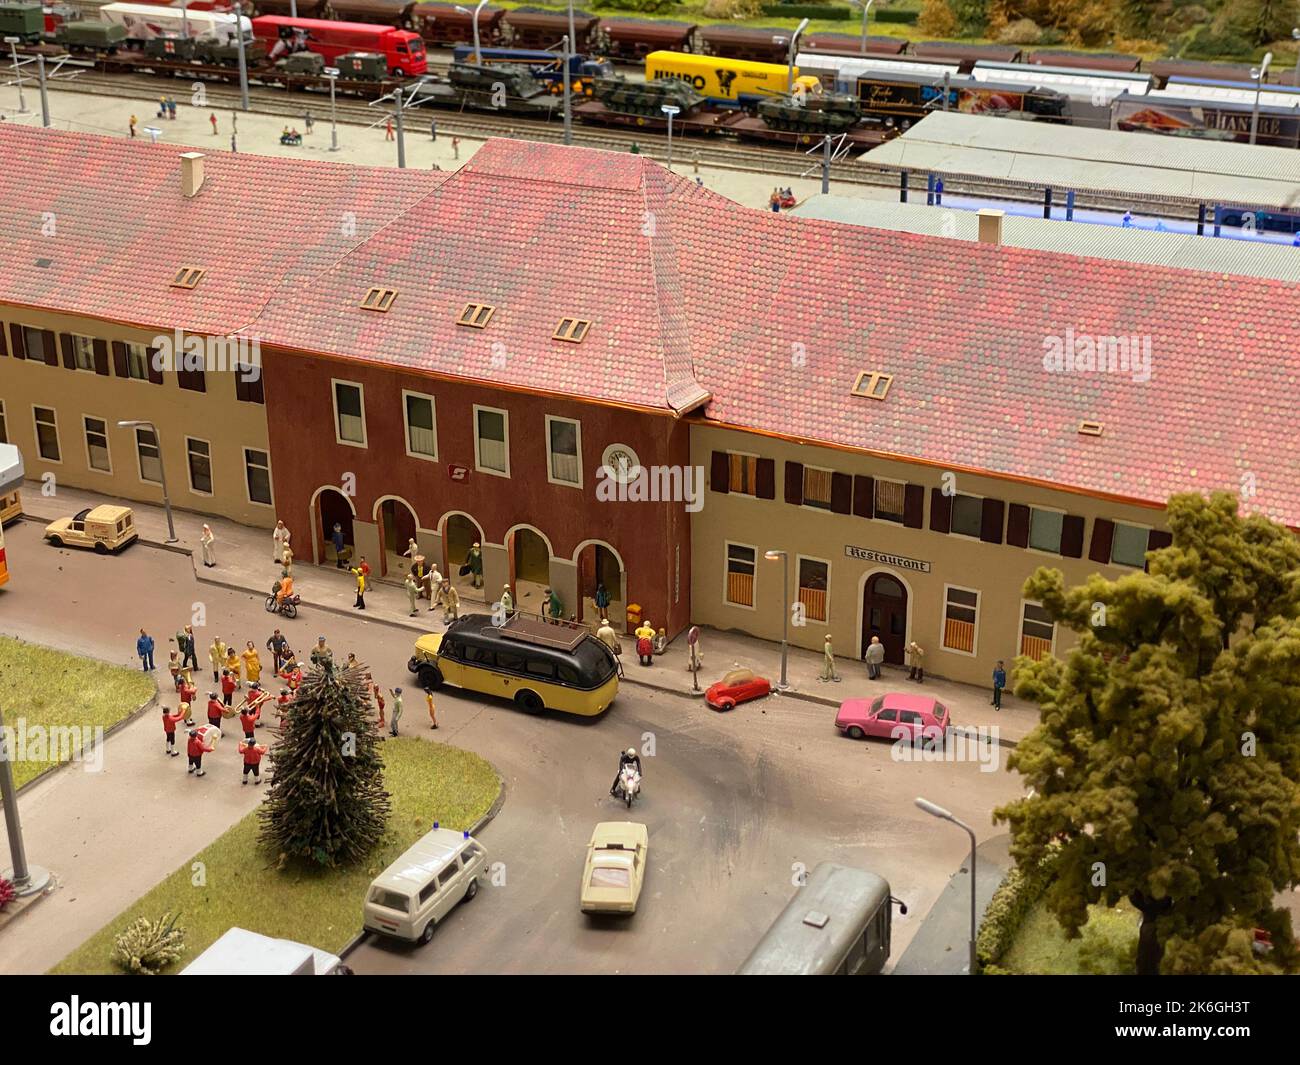 Miniature Replica Of Wörgl Station In Austria On A Railroad Layout Stock Photo